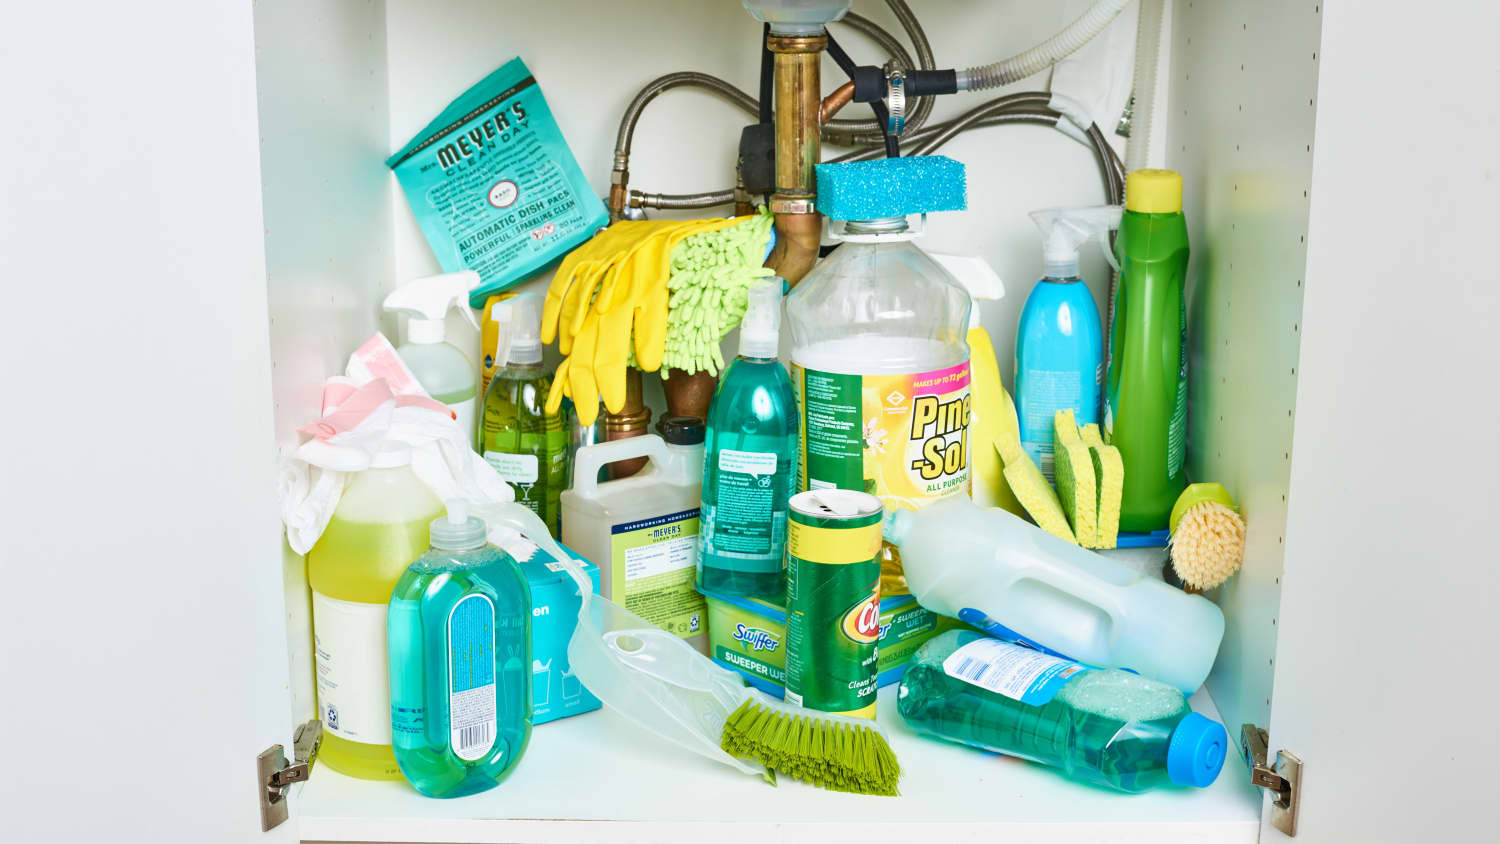 https://cdn.apartmenttherapy.info/image/upload/f_jpg,q_auto:eco,c_fill,g_auto,w_1500,ar_16:9/k%2FPhoto%2FLifestyle%2F2019-09-brilliant-ways-to-organize-all-of-your-cleaning-supplies%2FTK-Brilliant-Ways-to-Organize-All-of-Your-Cleaning-Supplies_105